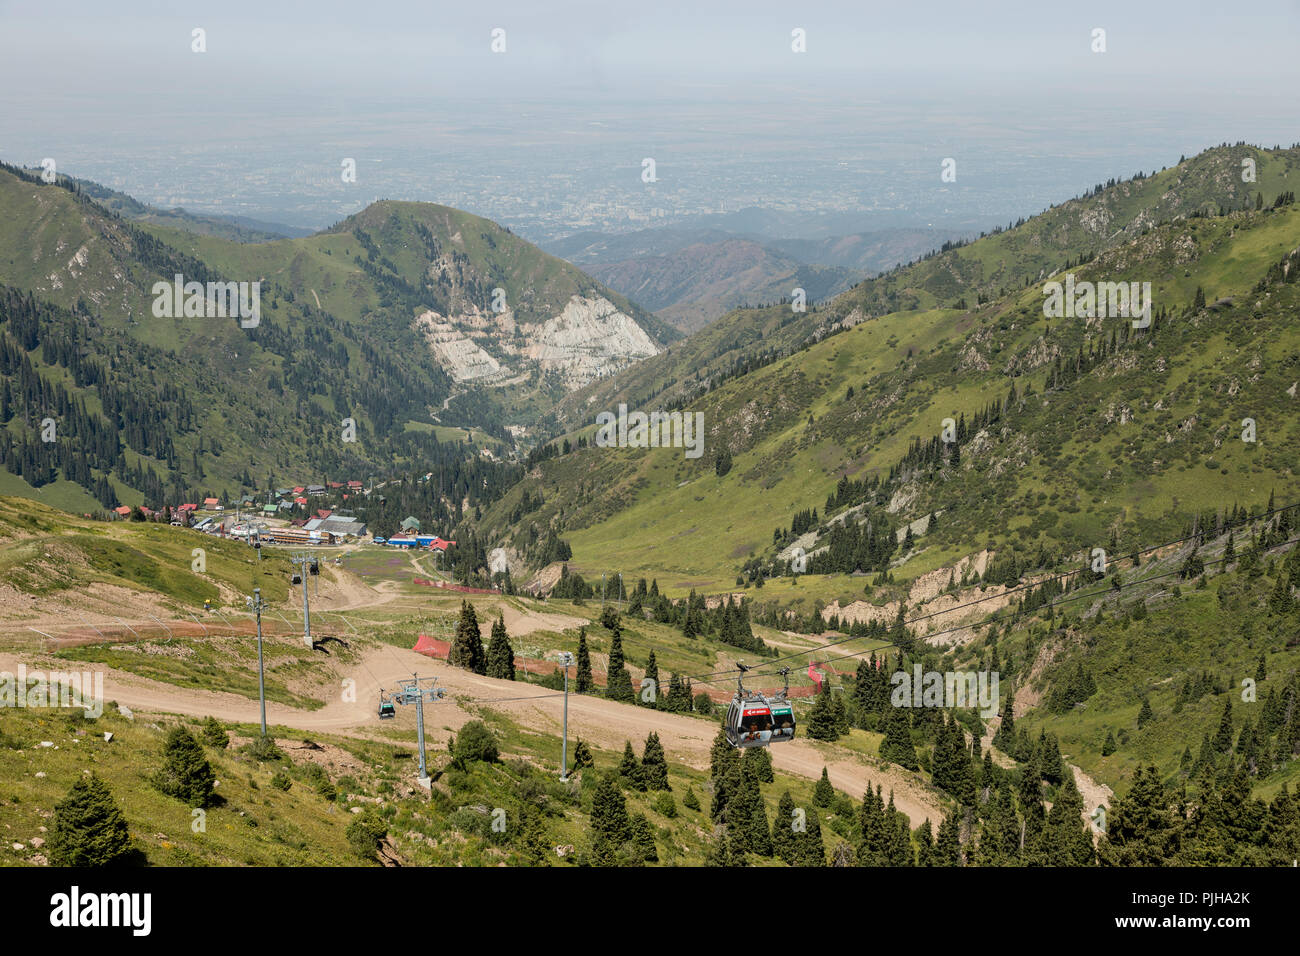 Almaty, Kazakhstan, August 6 2018: Mid station of the Ski Resort Shymbulak Mountains during the summer Stock Photo